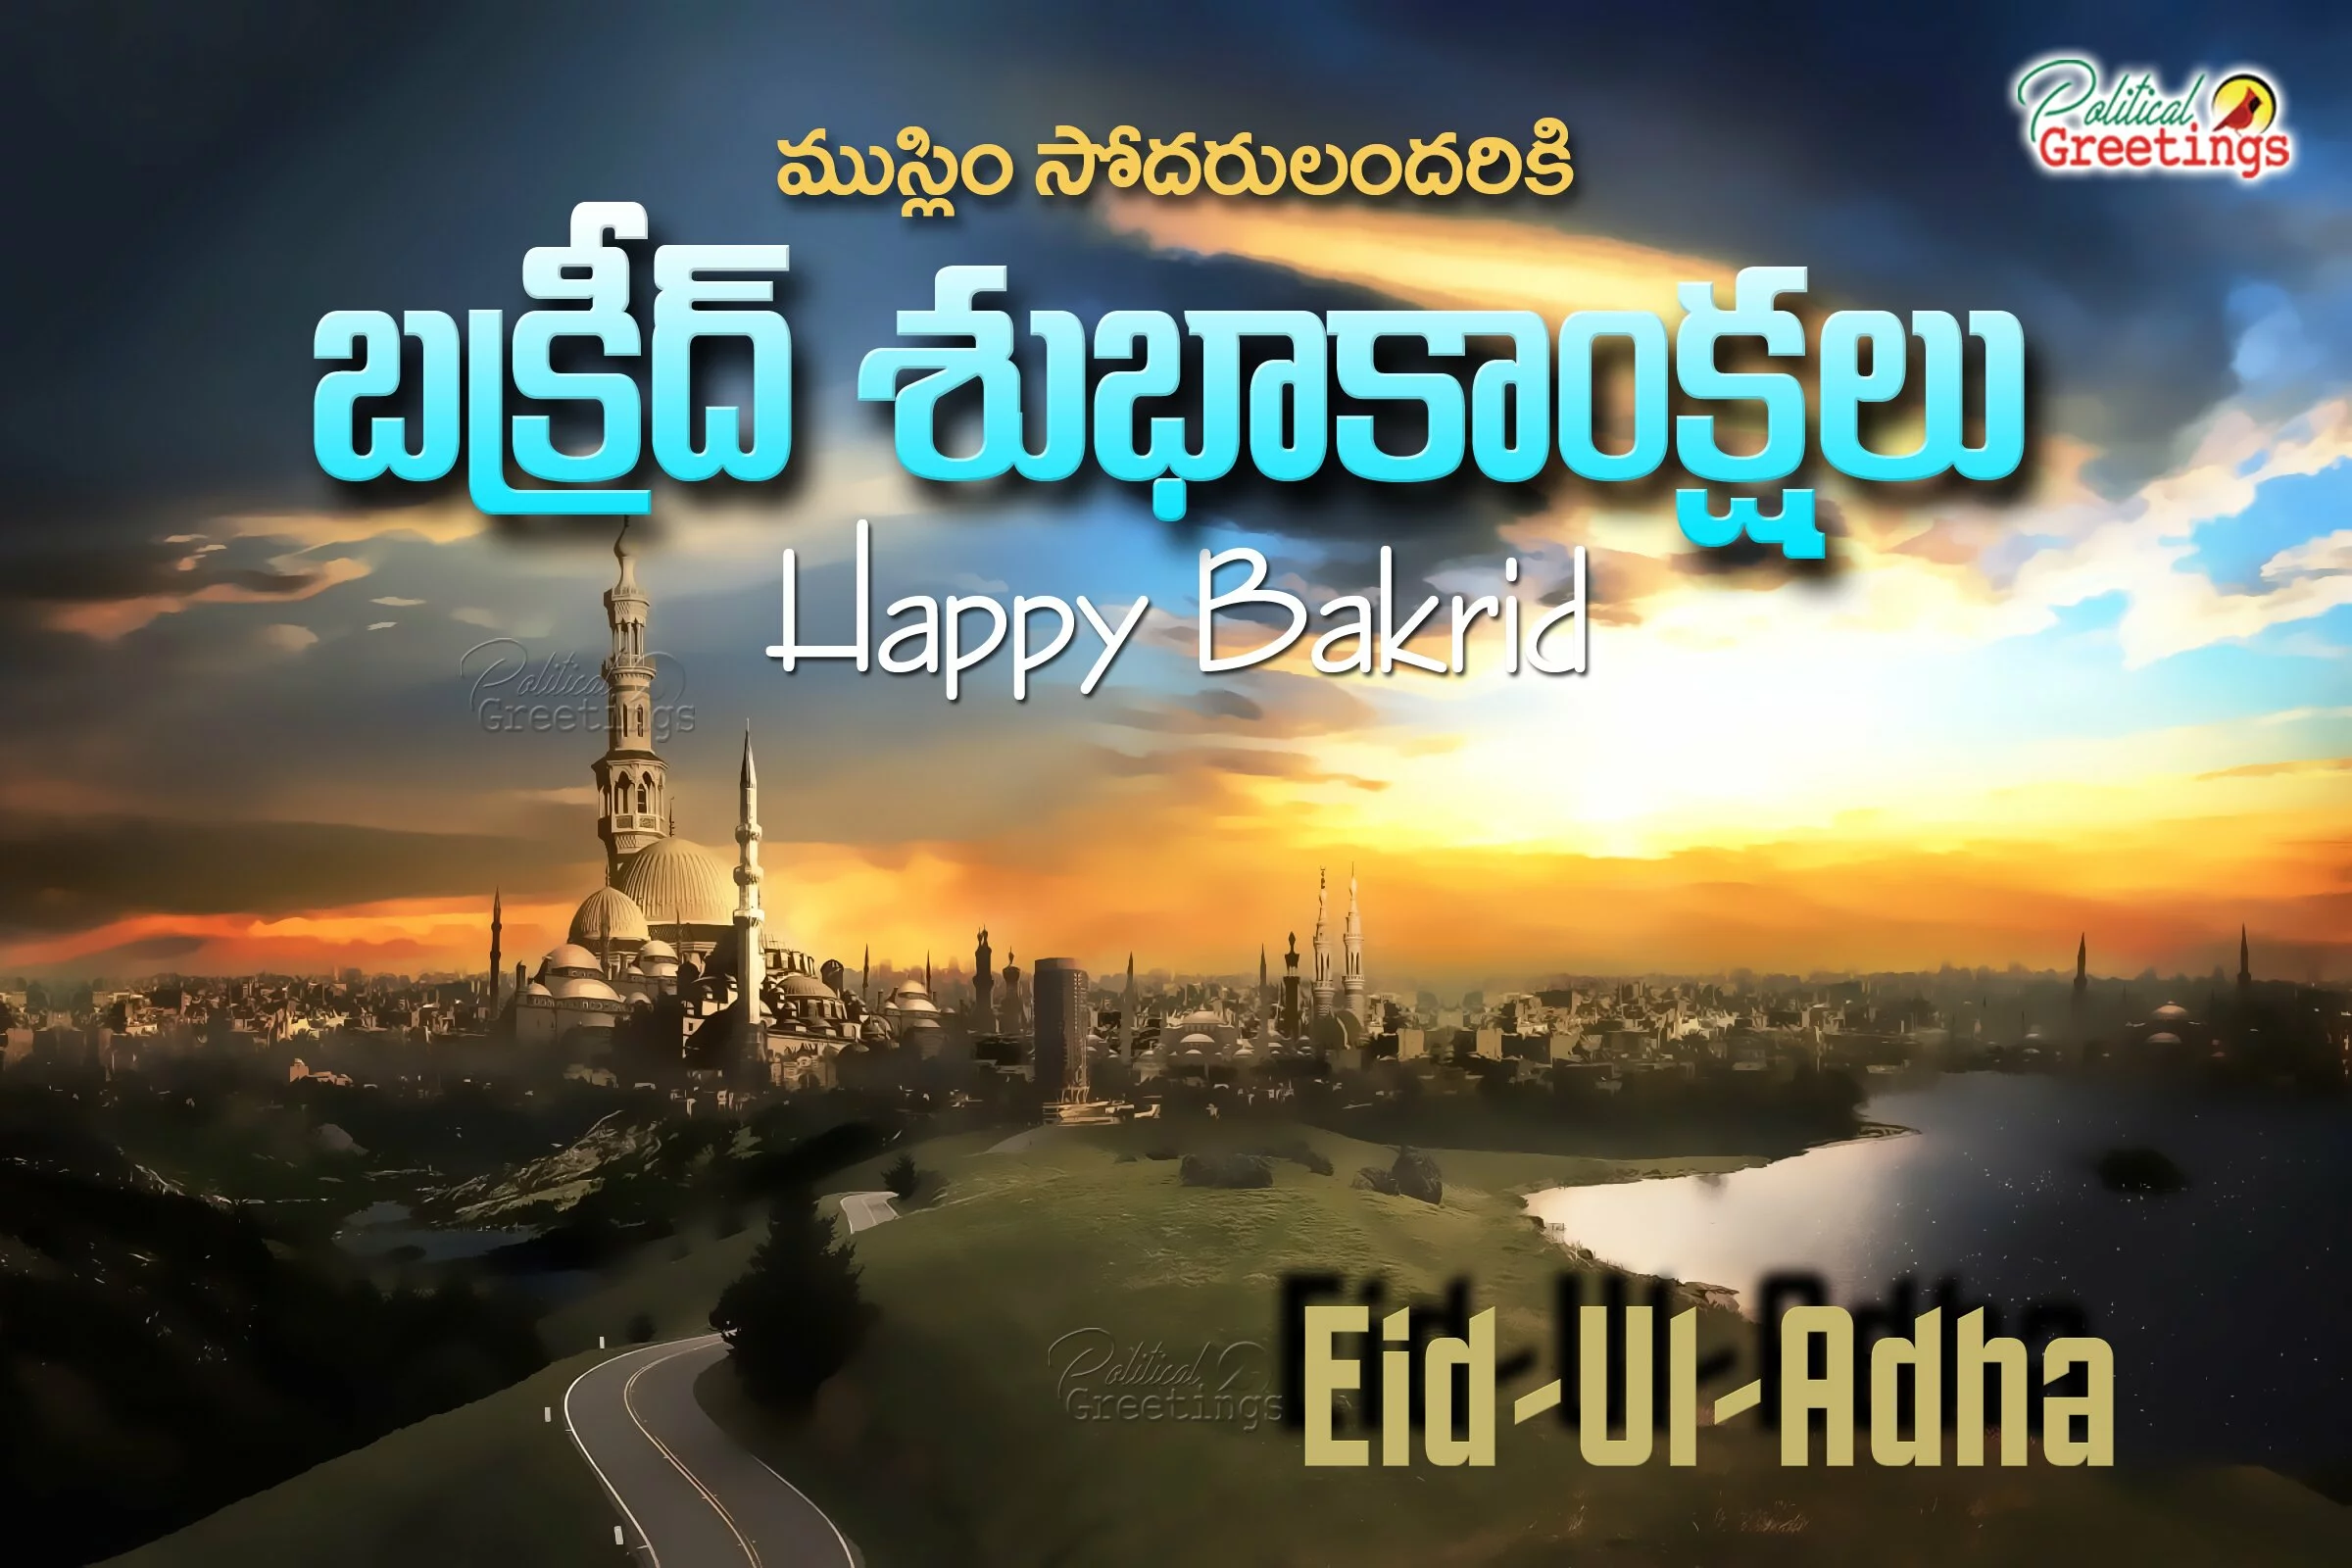 Eid-Ul-Adha-Happy Bakrid Festival Greetings with Islamic Hd Wallpapers Free Download in Telugu